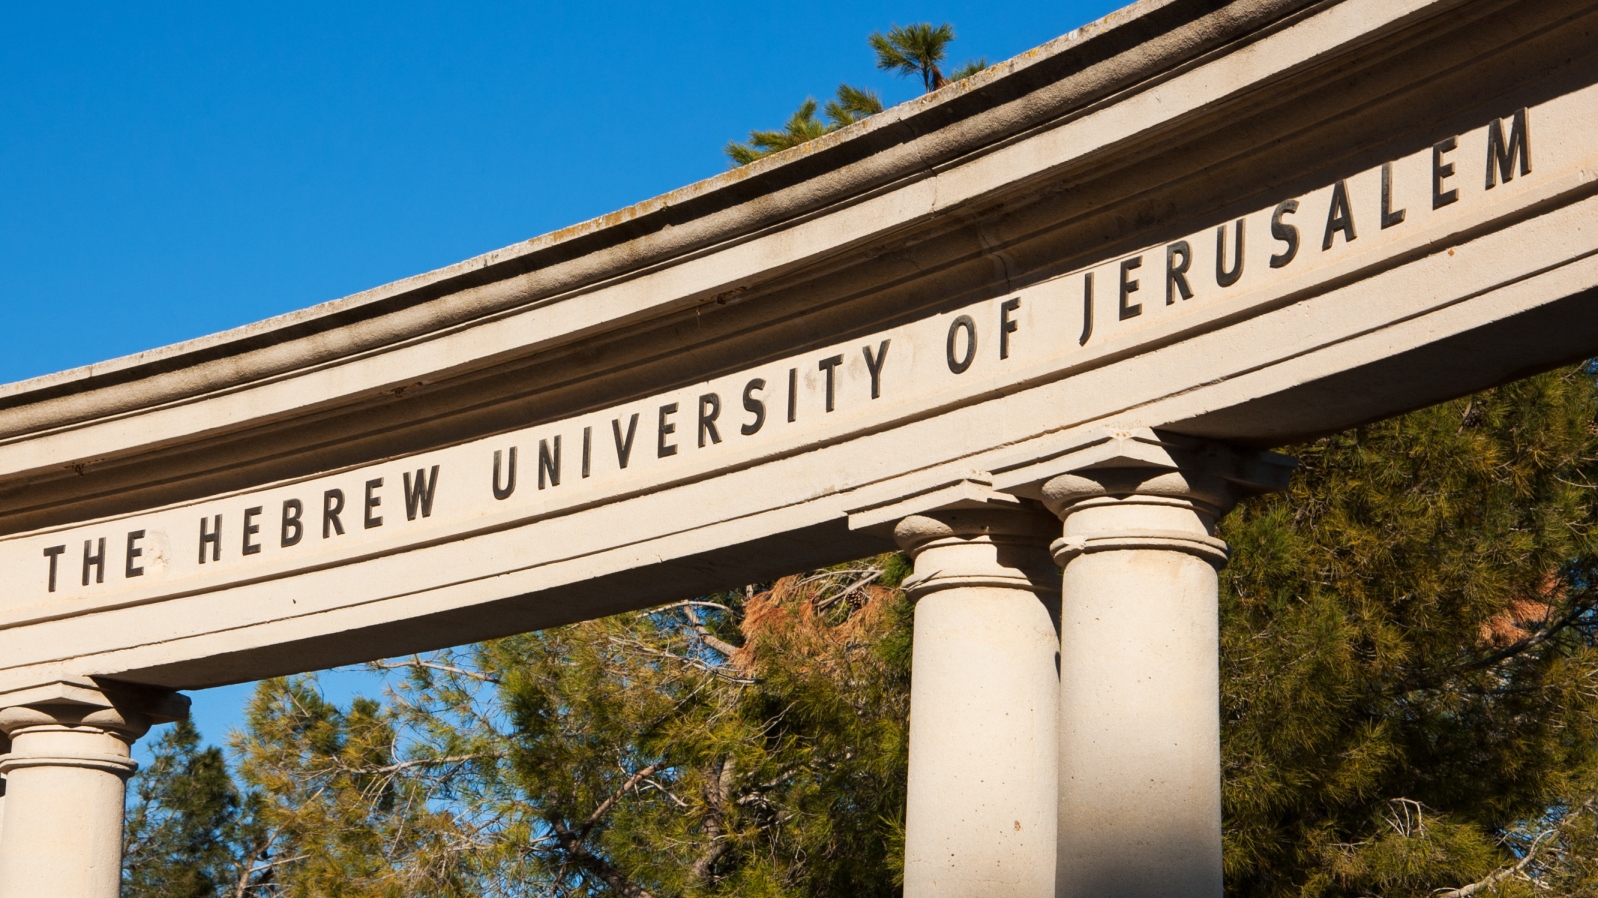 Hebrew University photo by Elena Dijour/Shutterstock.com